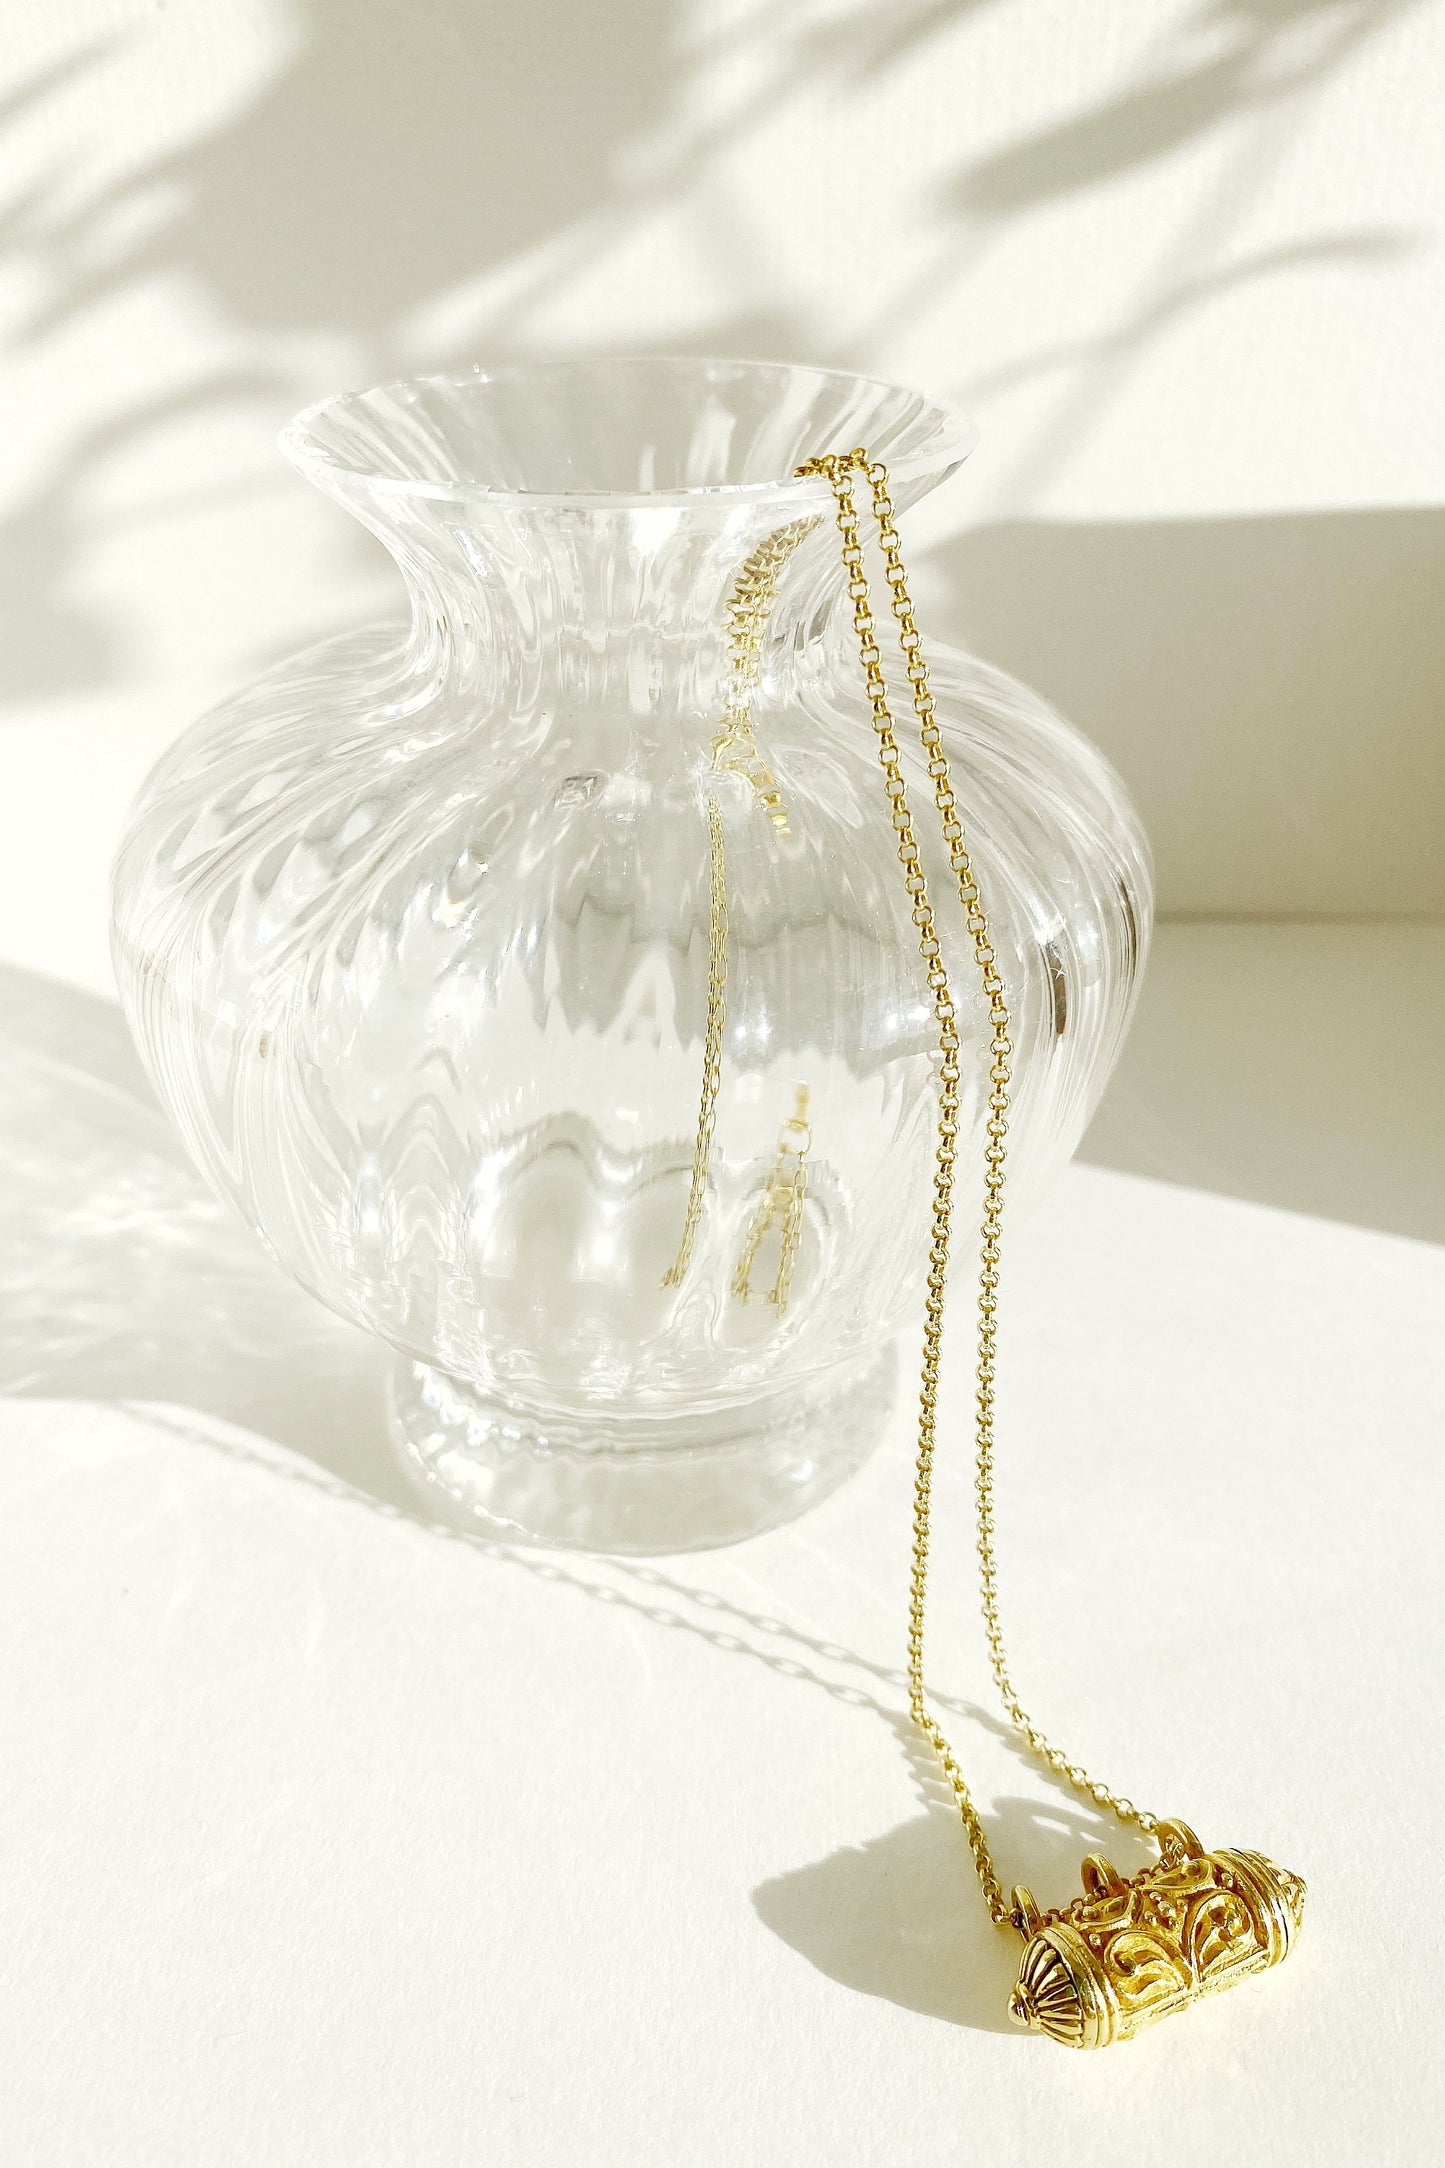 Kiaria Wishing Locket with chain draped over rim of glass vase